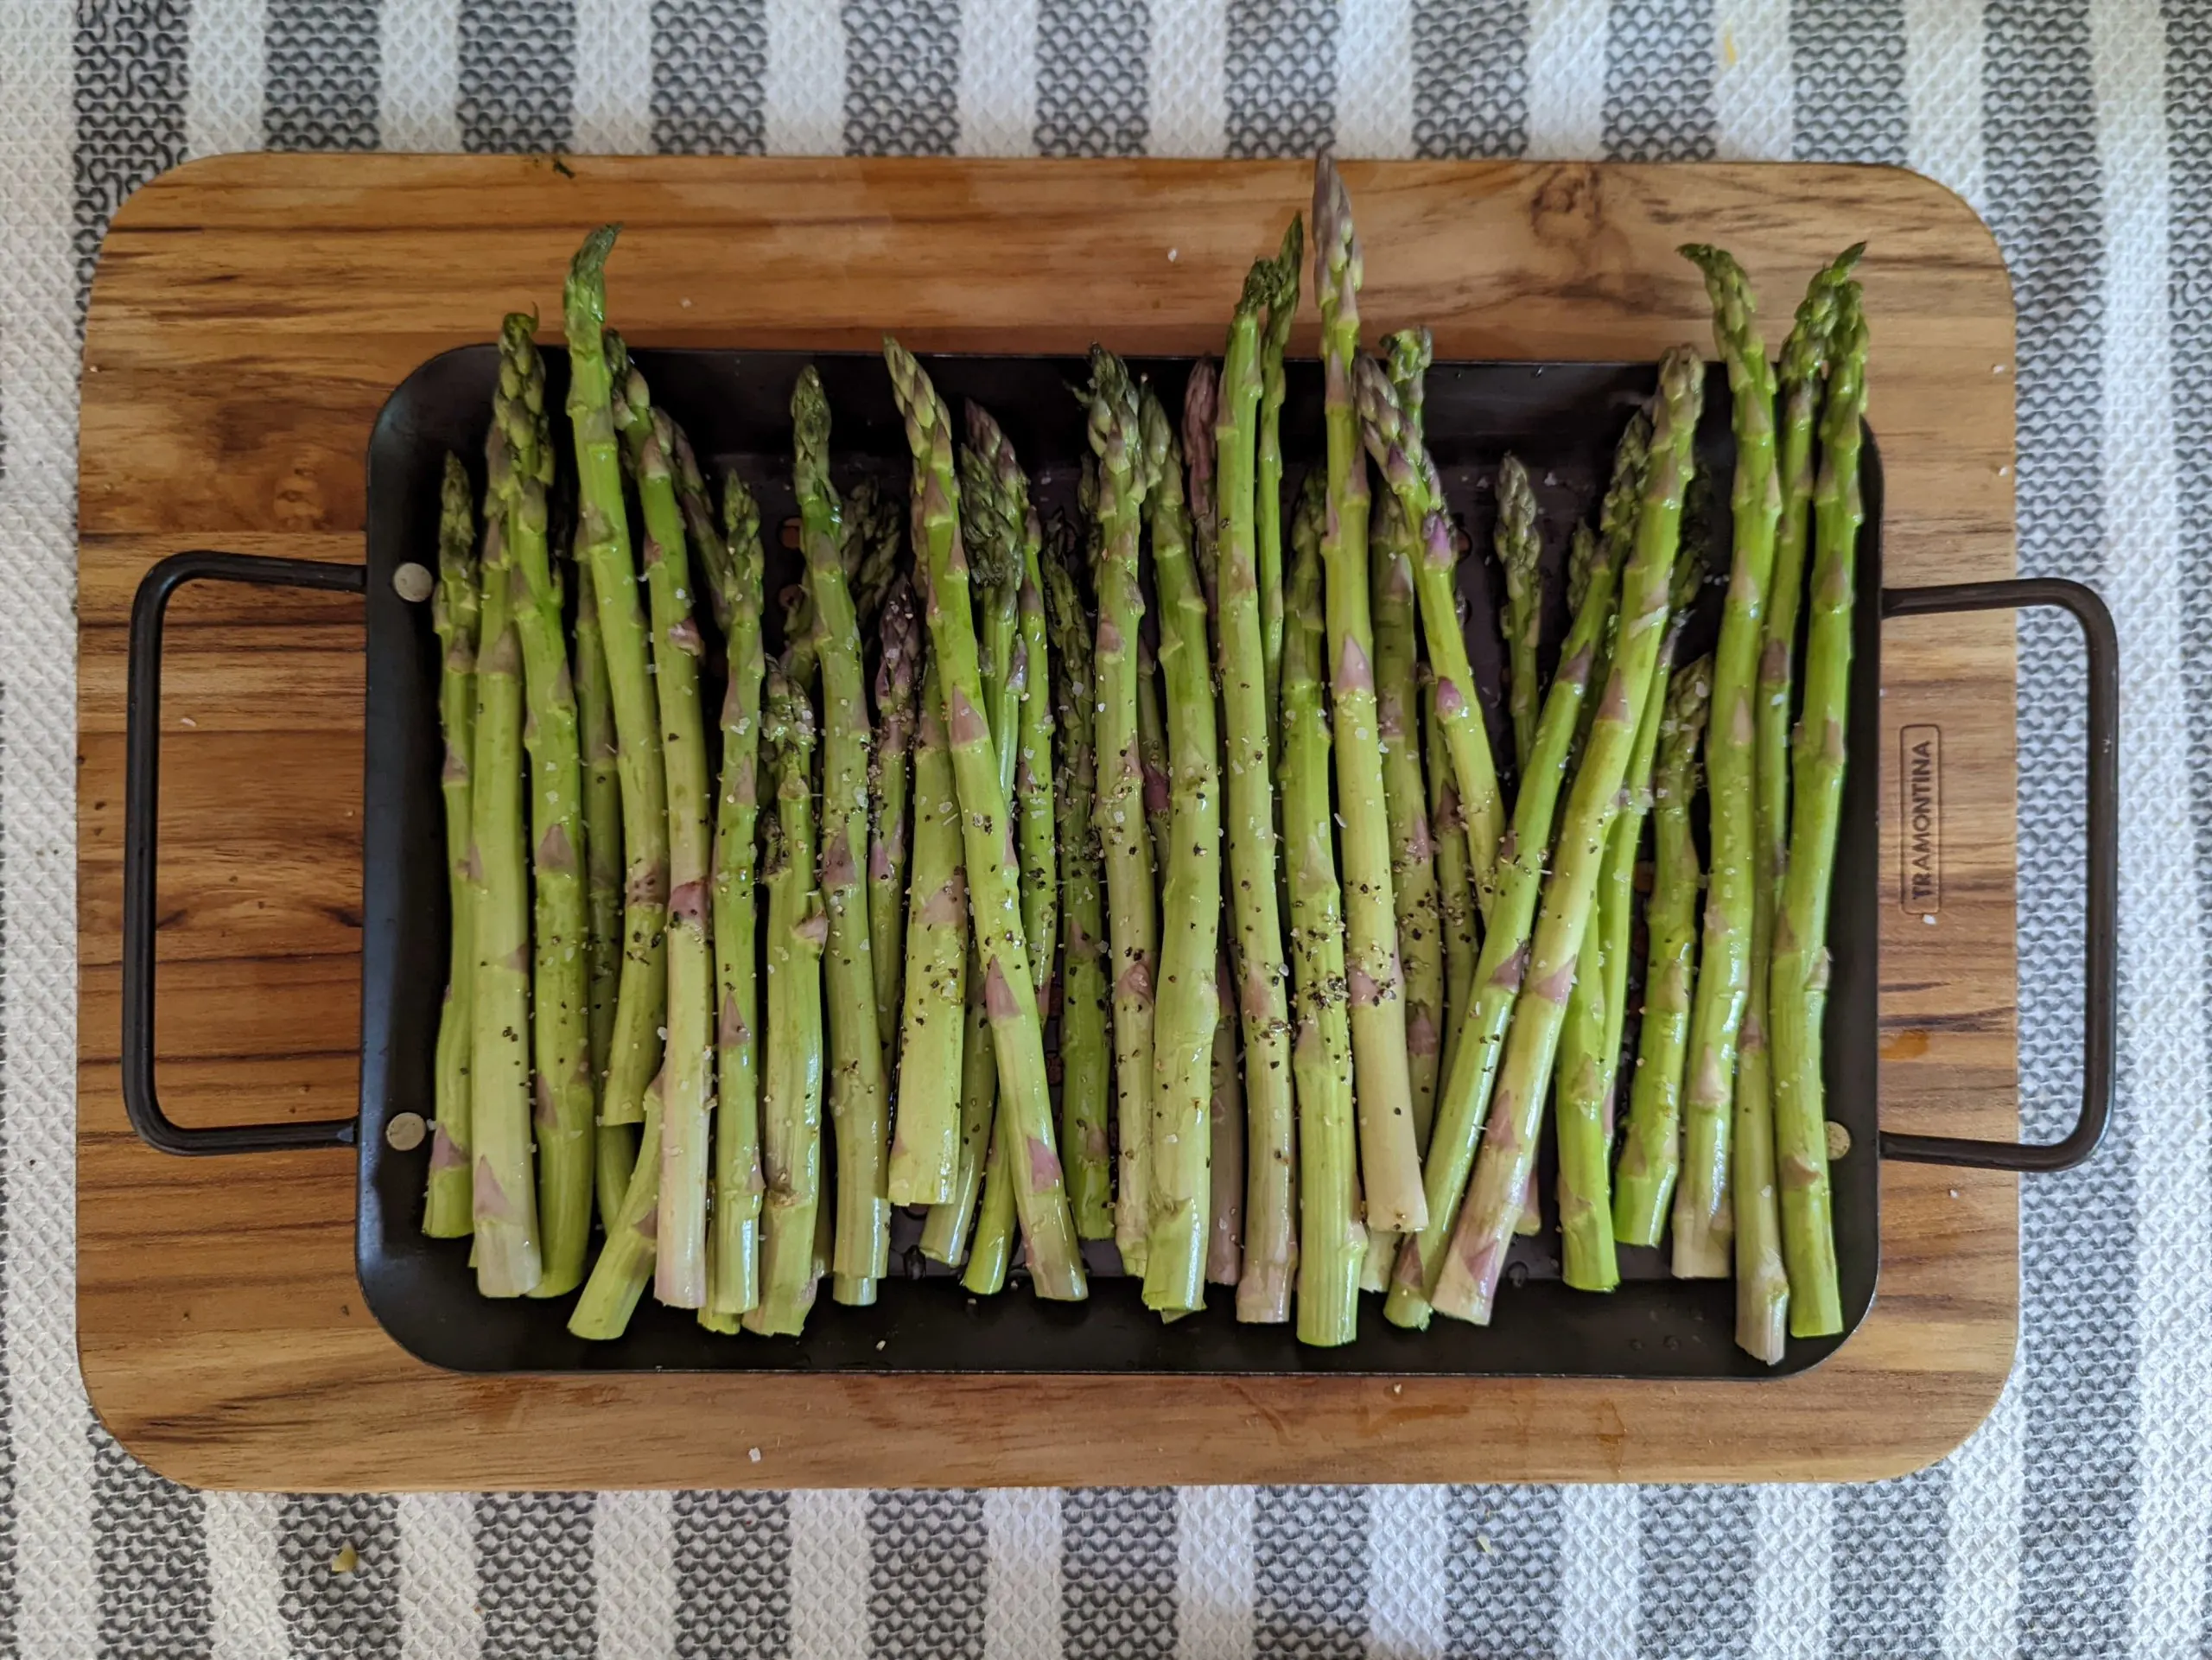 Line the asparagus onto the vegetable basket.